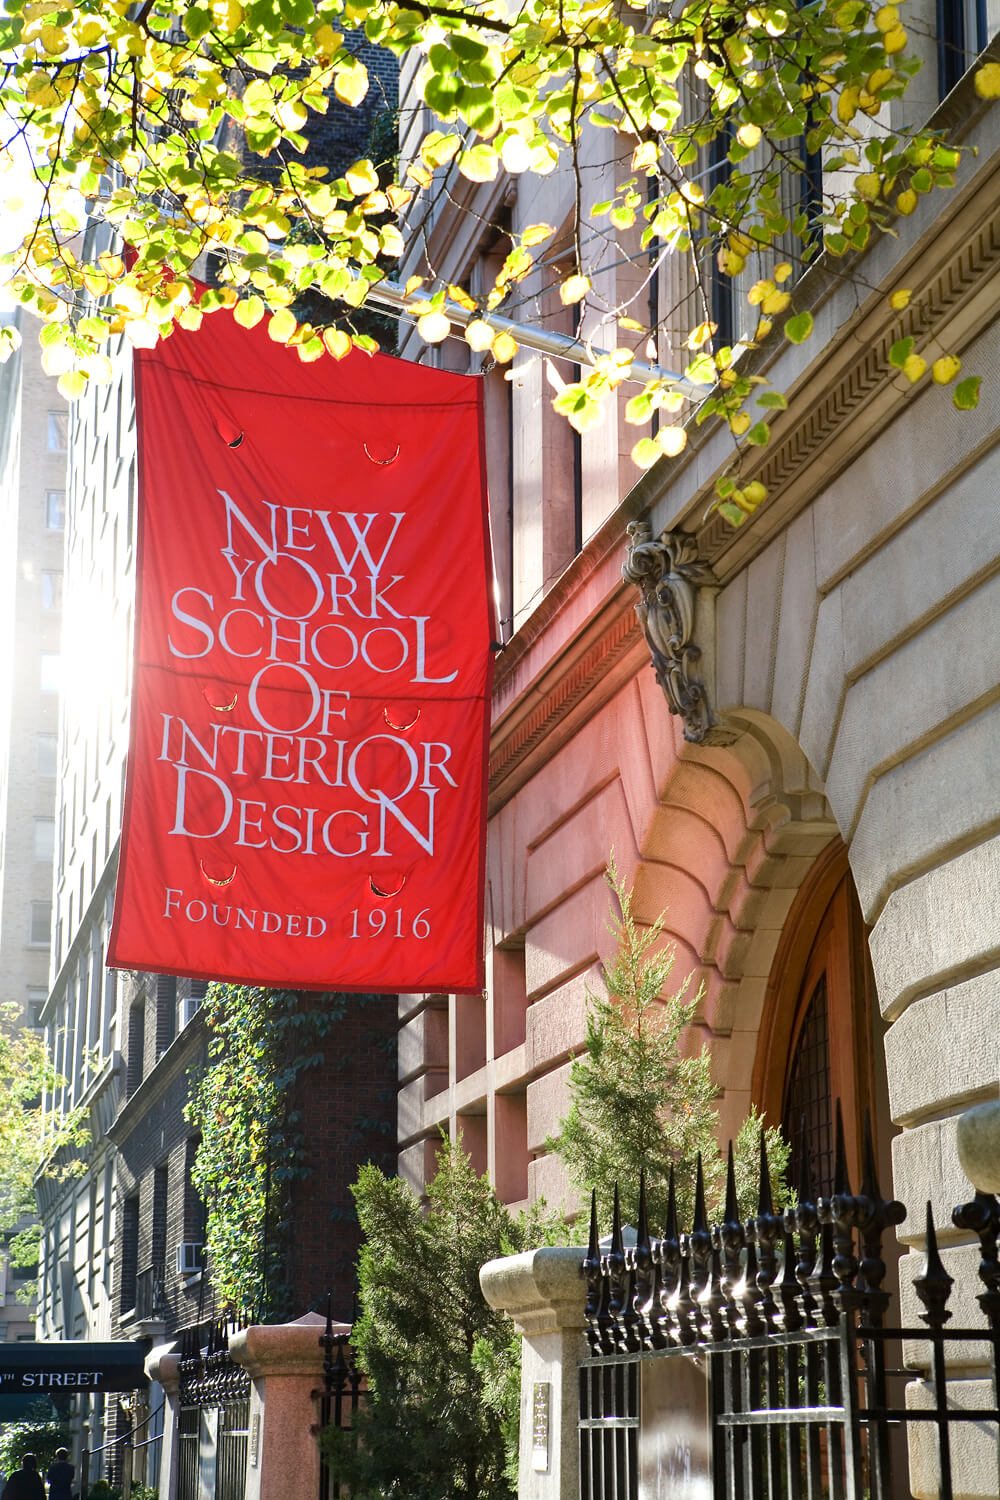 Top 10 Interior Design Schools in the U.S. - DegreeQuery.com
